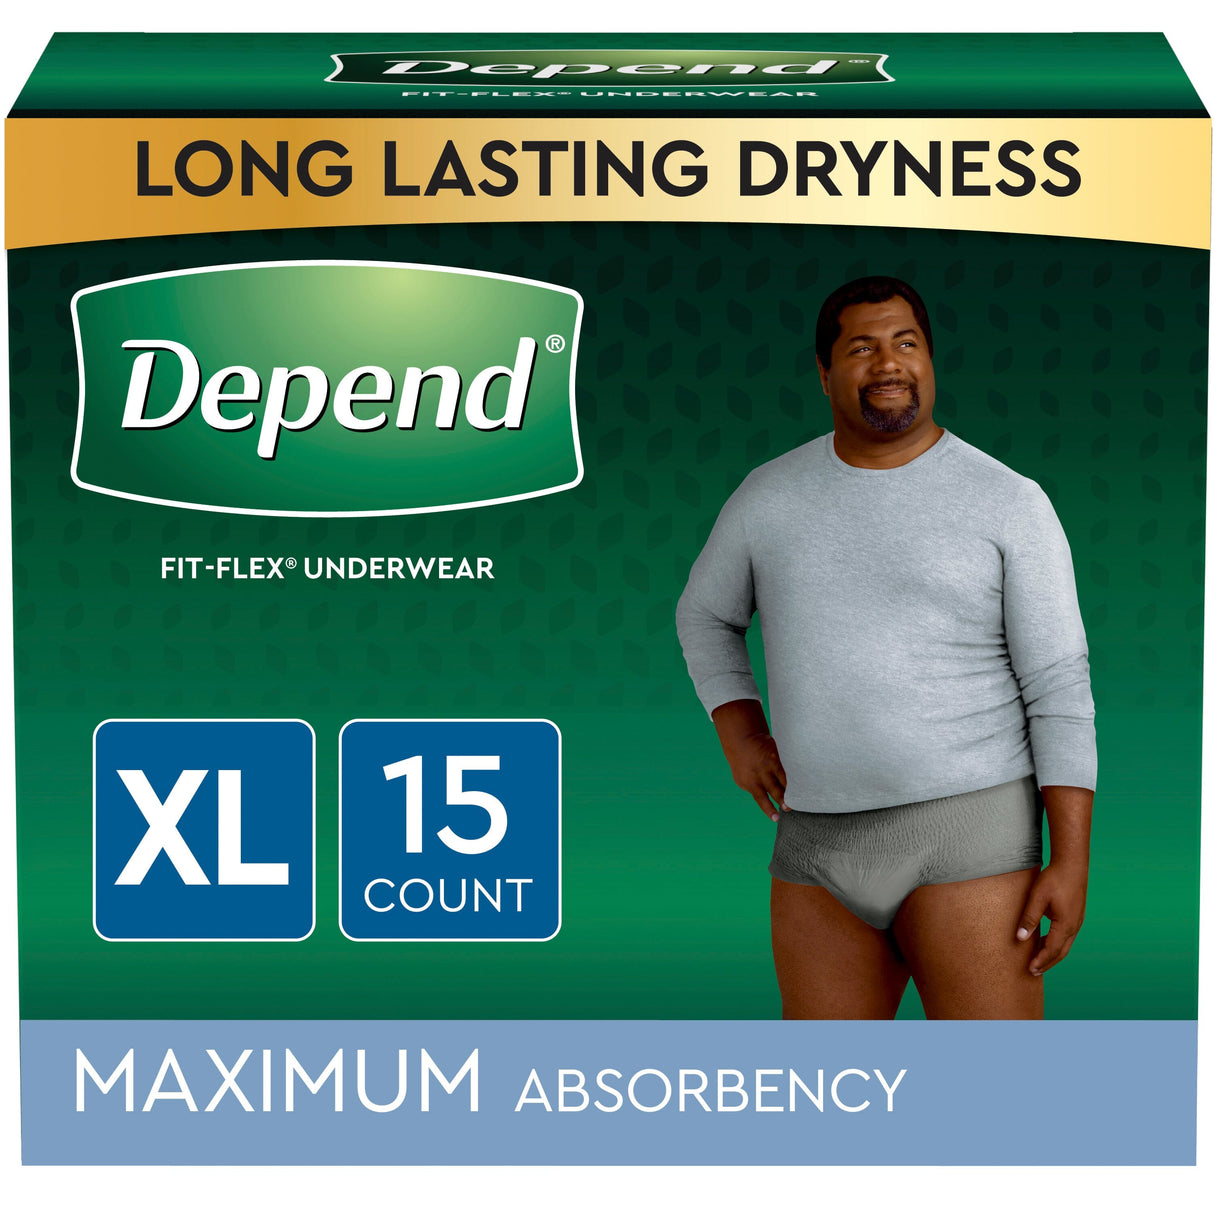 Depend Fit-Flex Underwear, For Women, Moderate Absorbency, XL